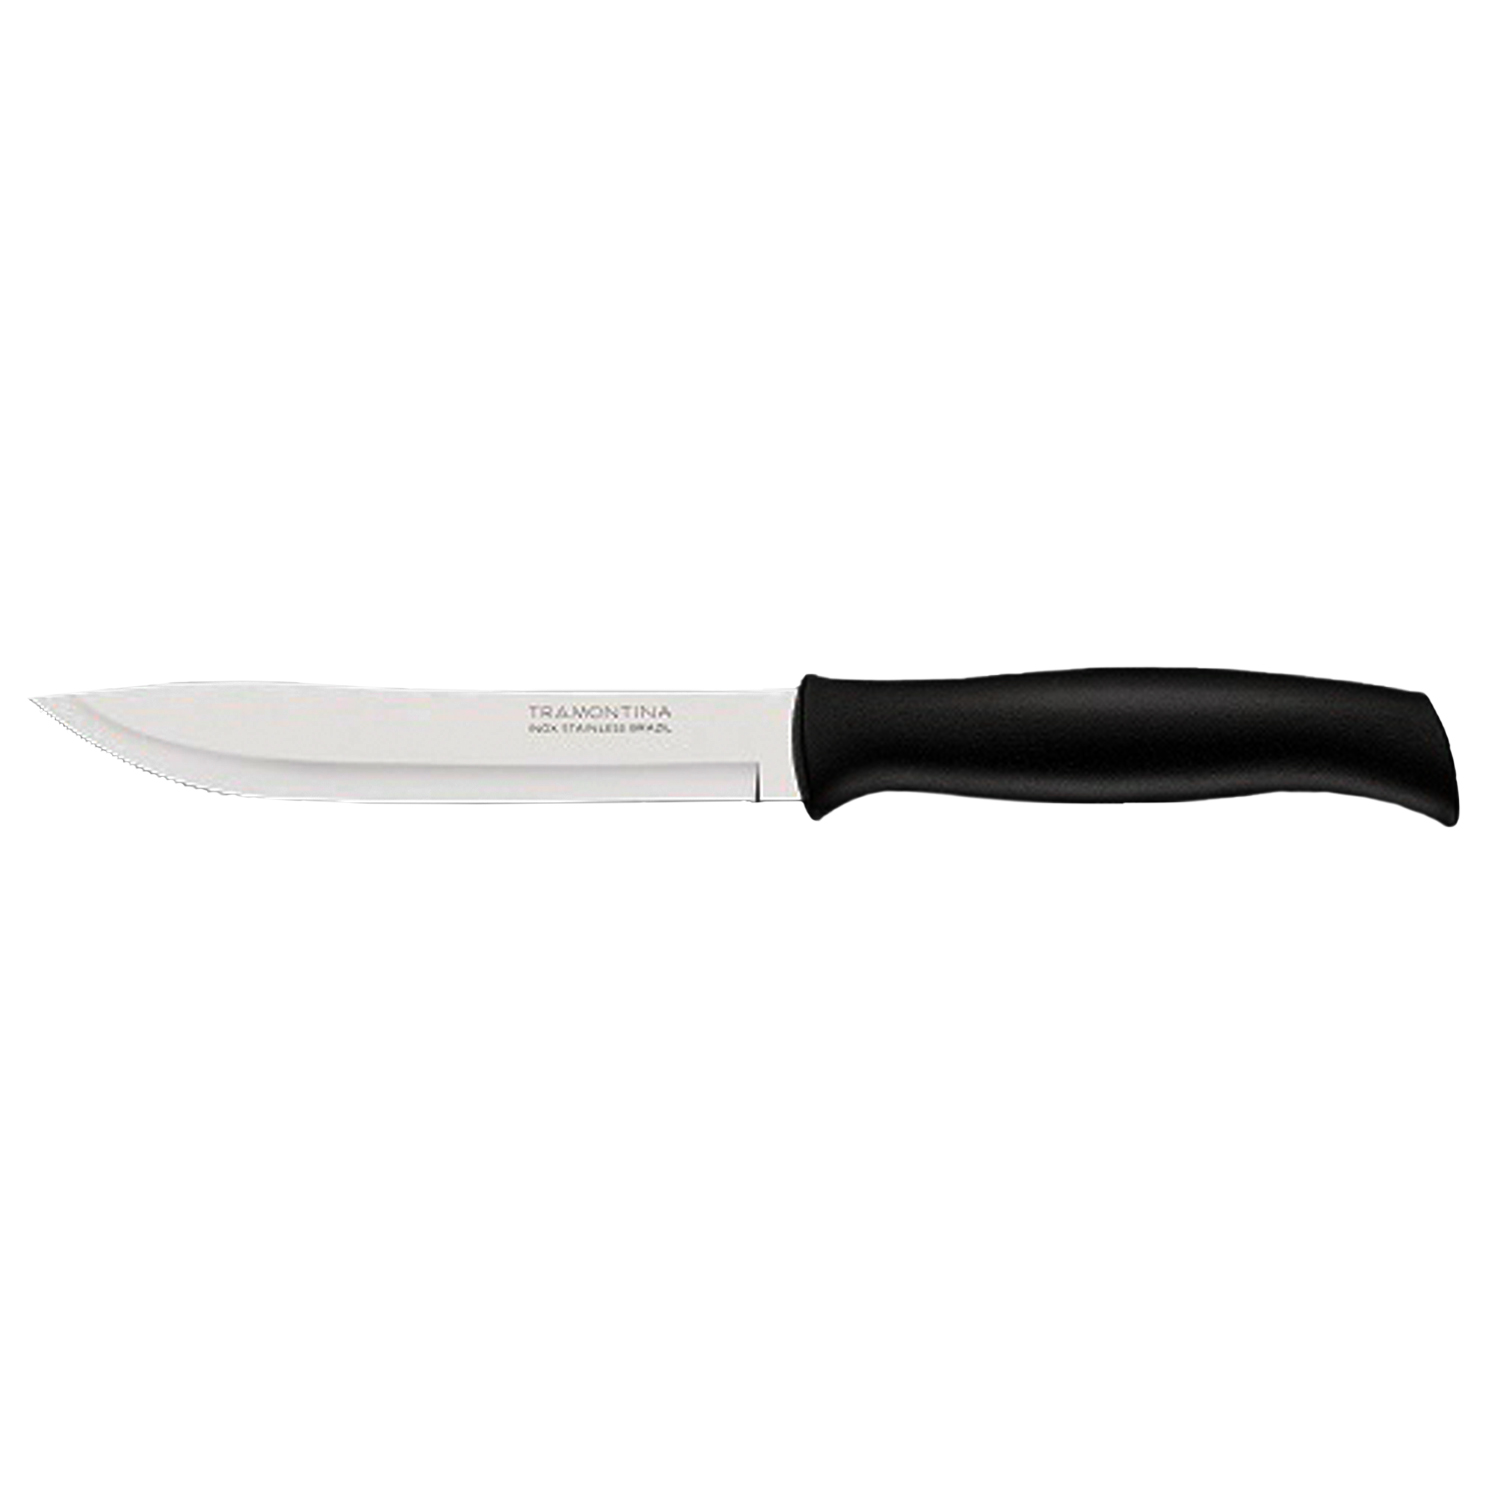 Нож Athus 153мм/277мм для мяса черный 2шт/уп